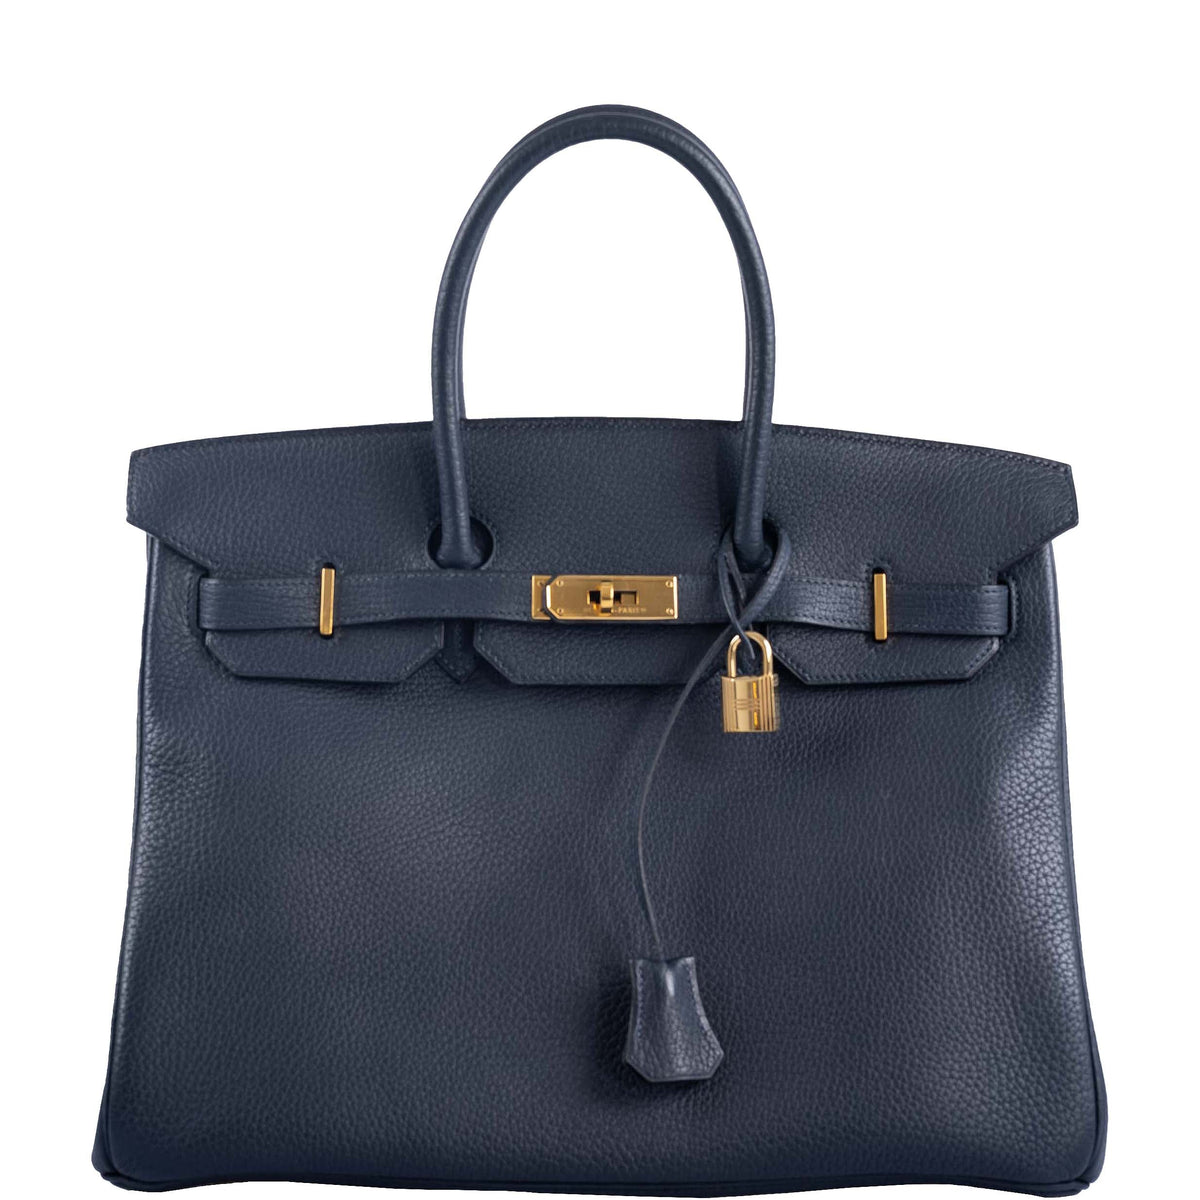 Hermès Birkin Handbag 365355